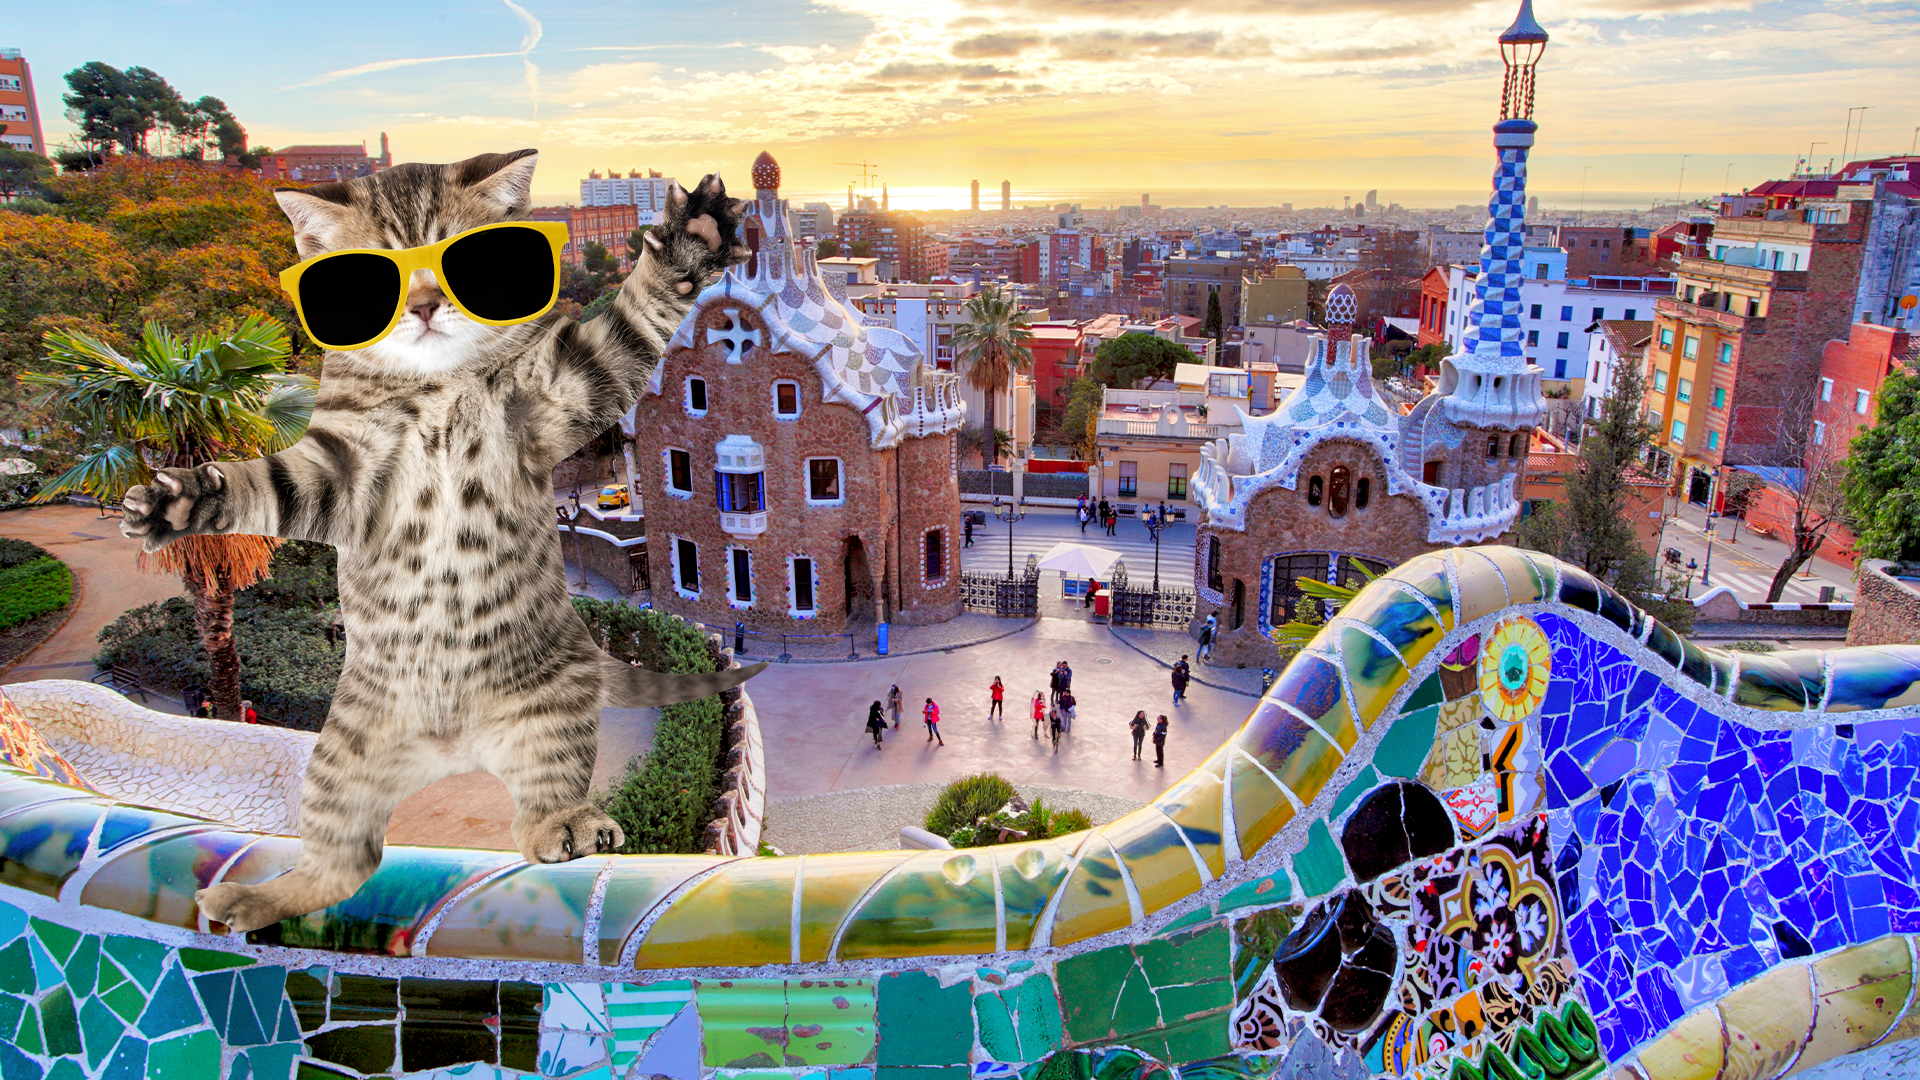 Barcelona with dancing cat